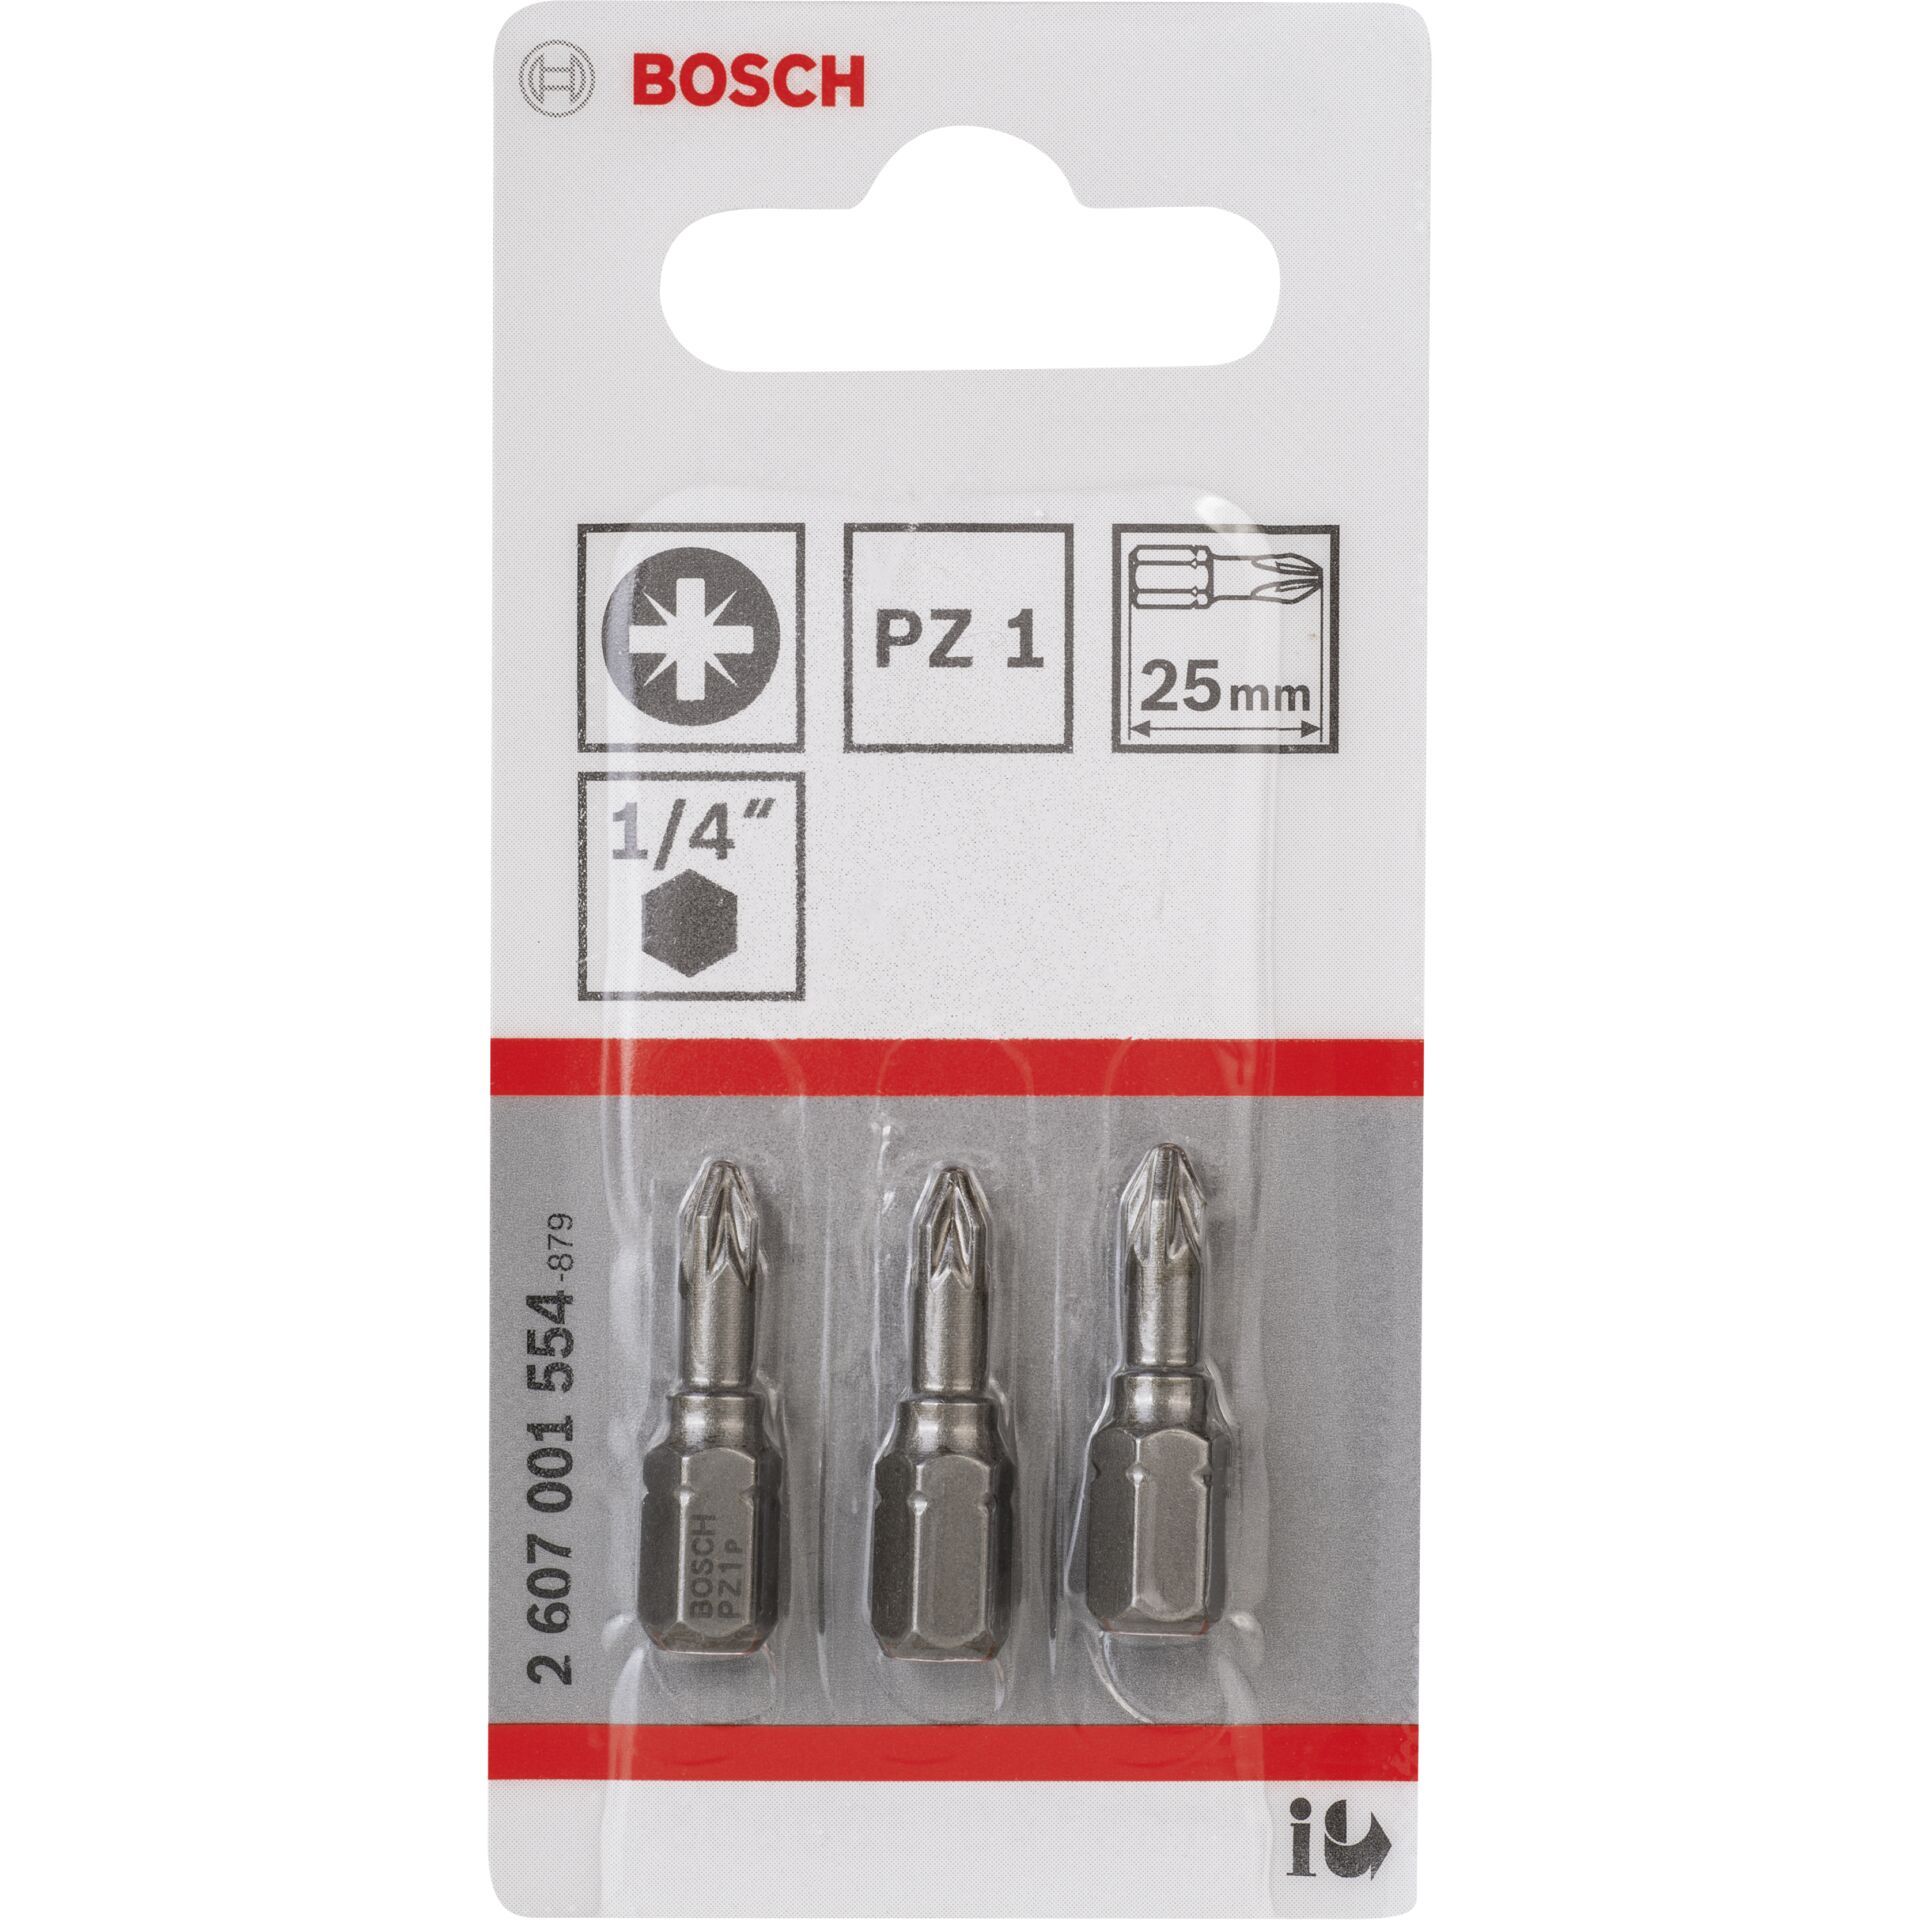 Bosch 3pcs PZ Screwdriver Bit PH1 XH1 25mm